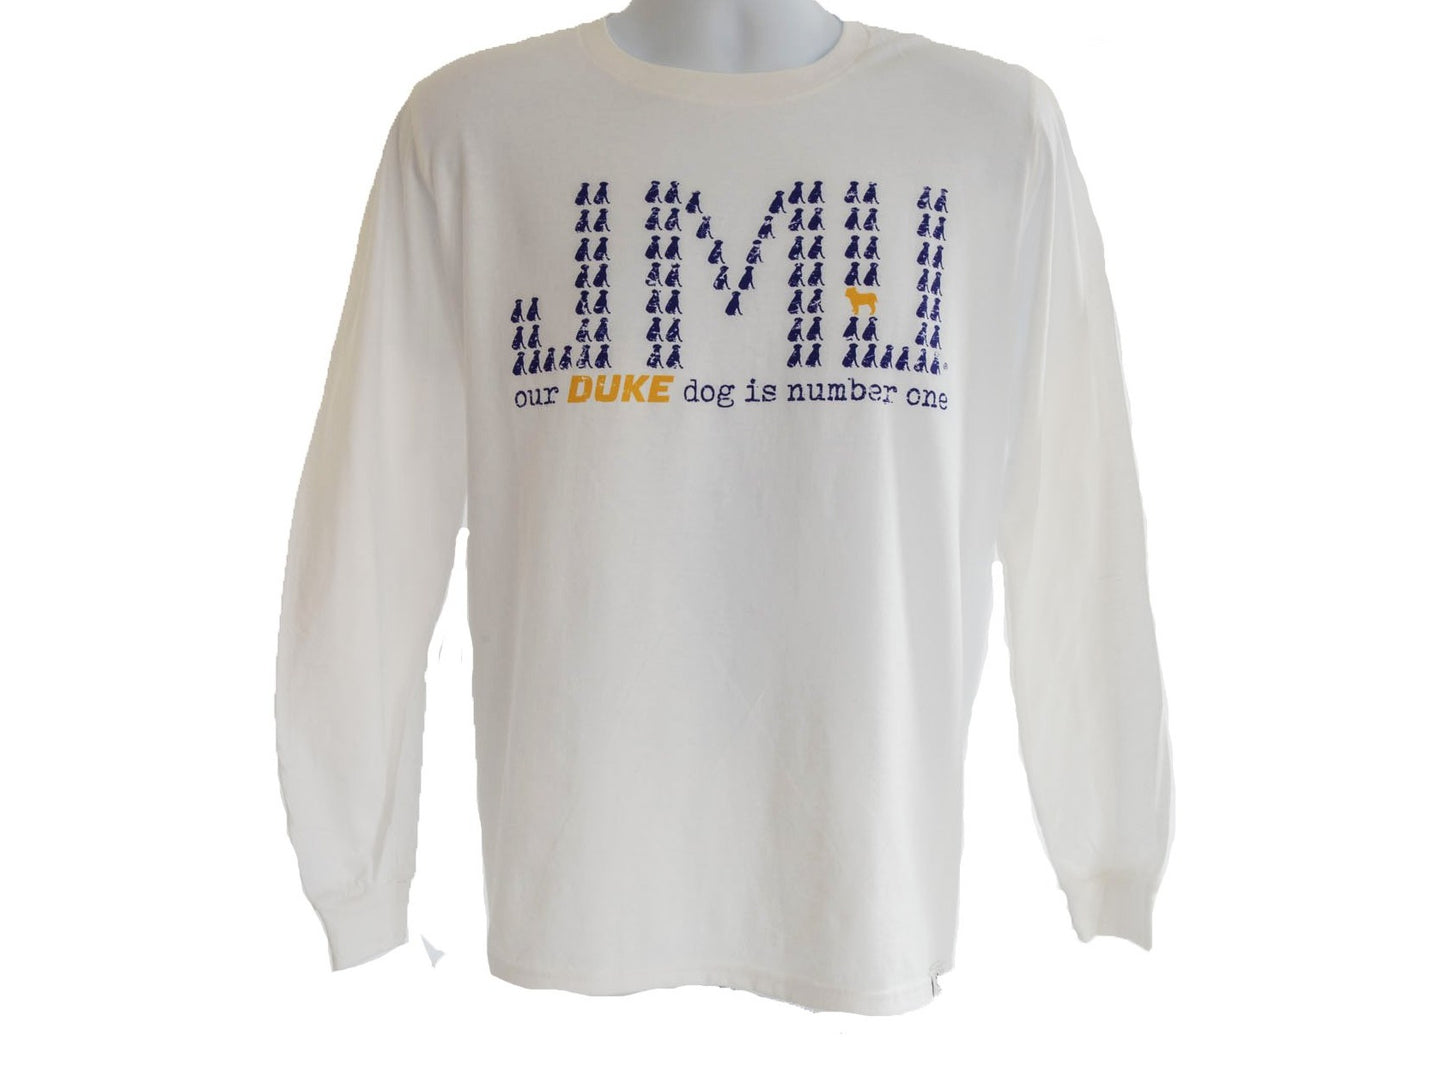 JMU - Long Sleeve T-Shirt